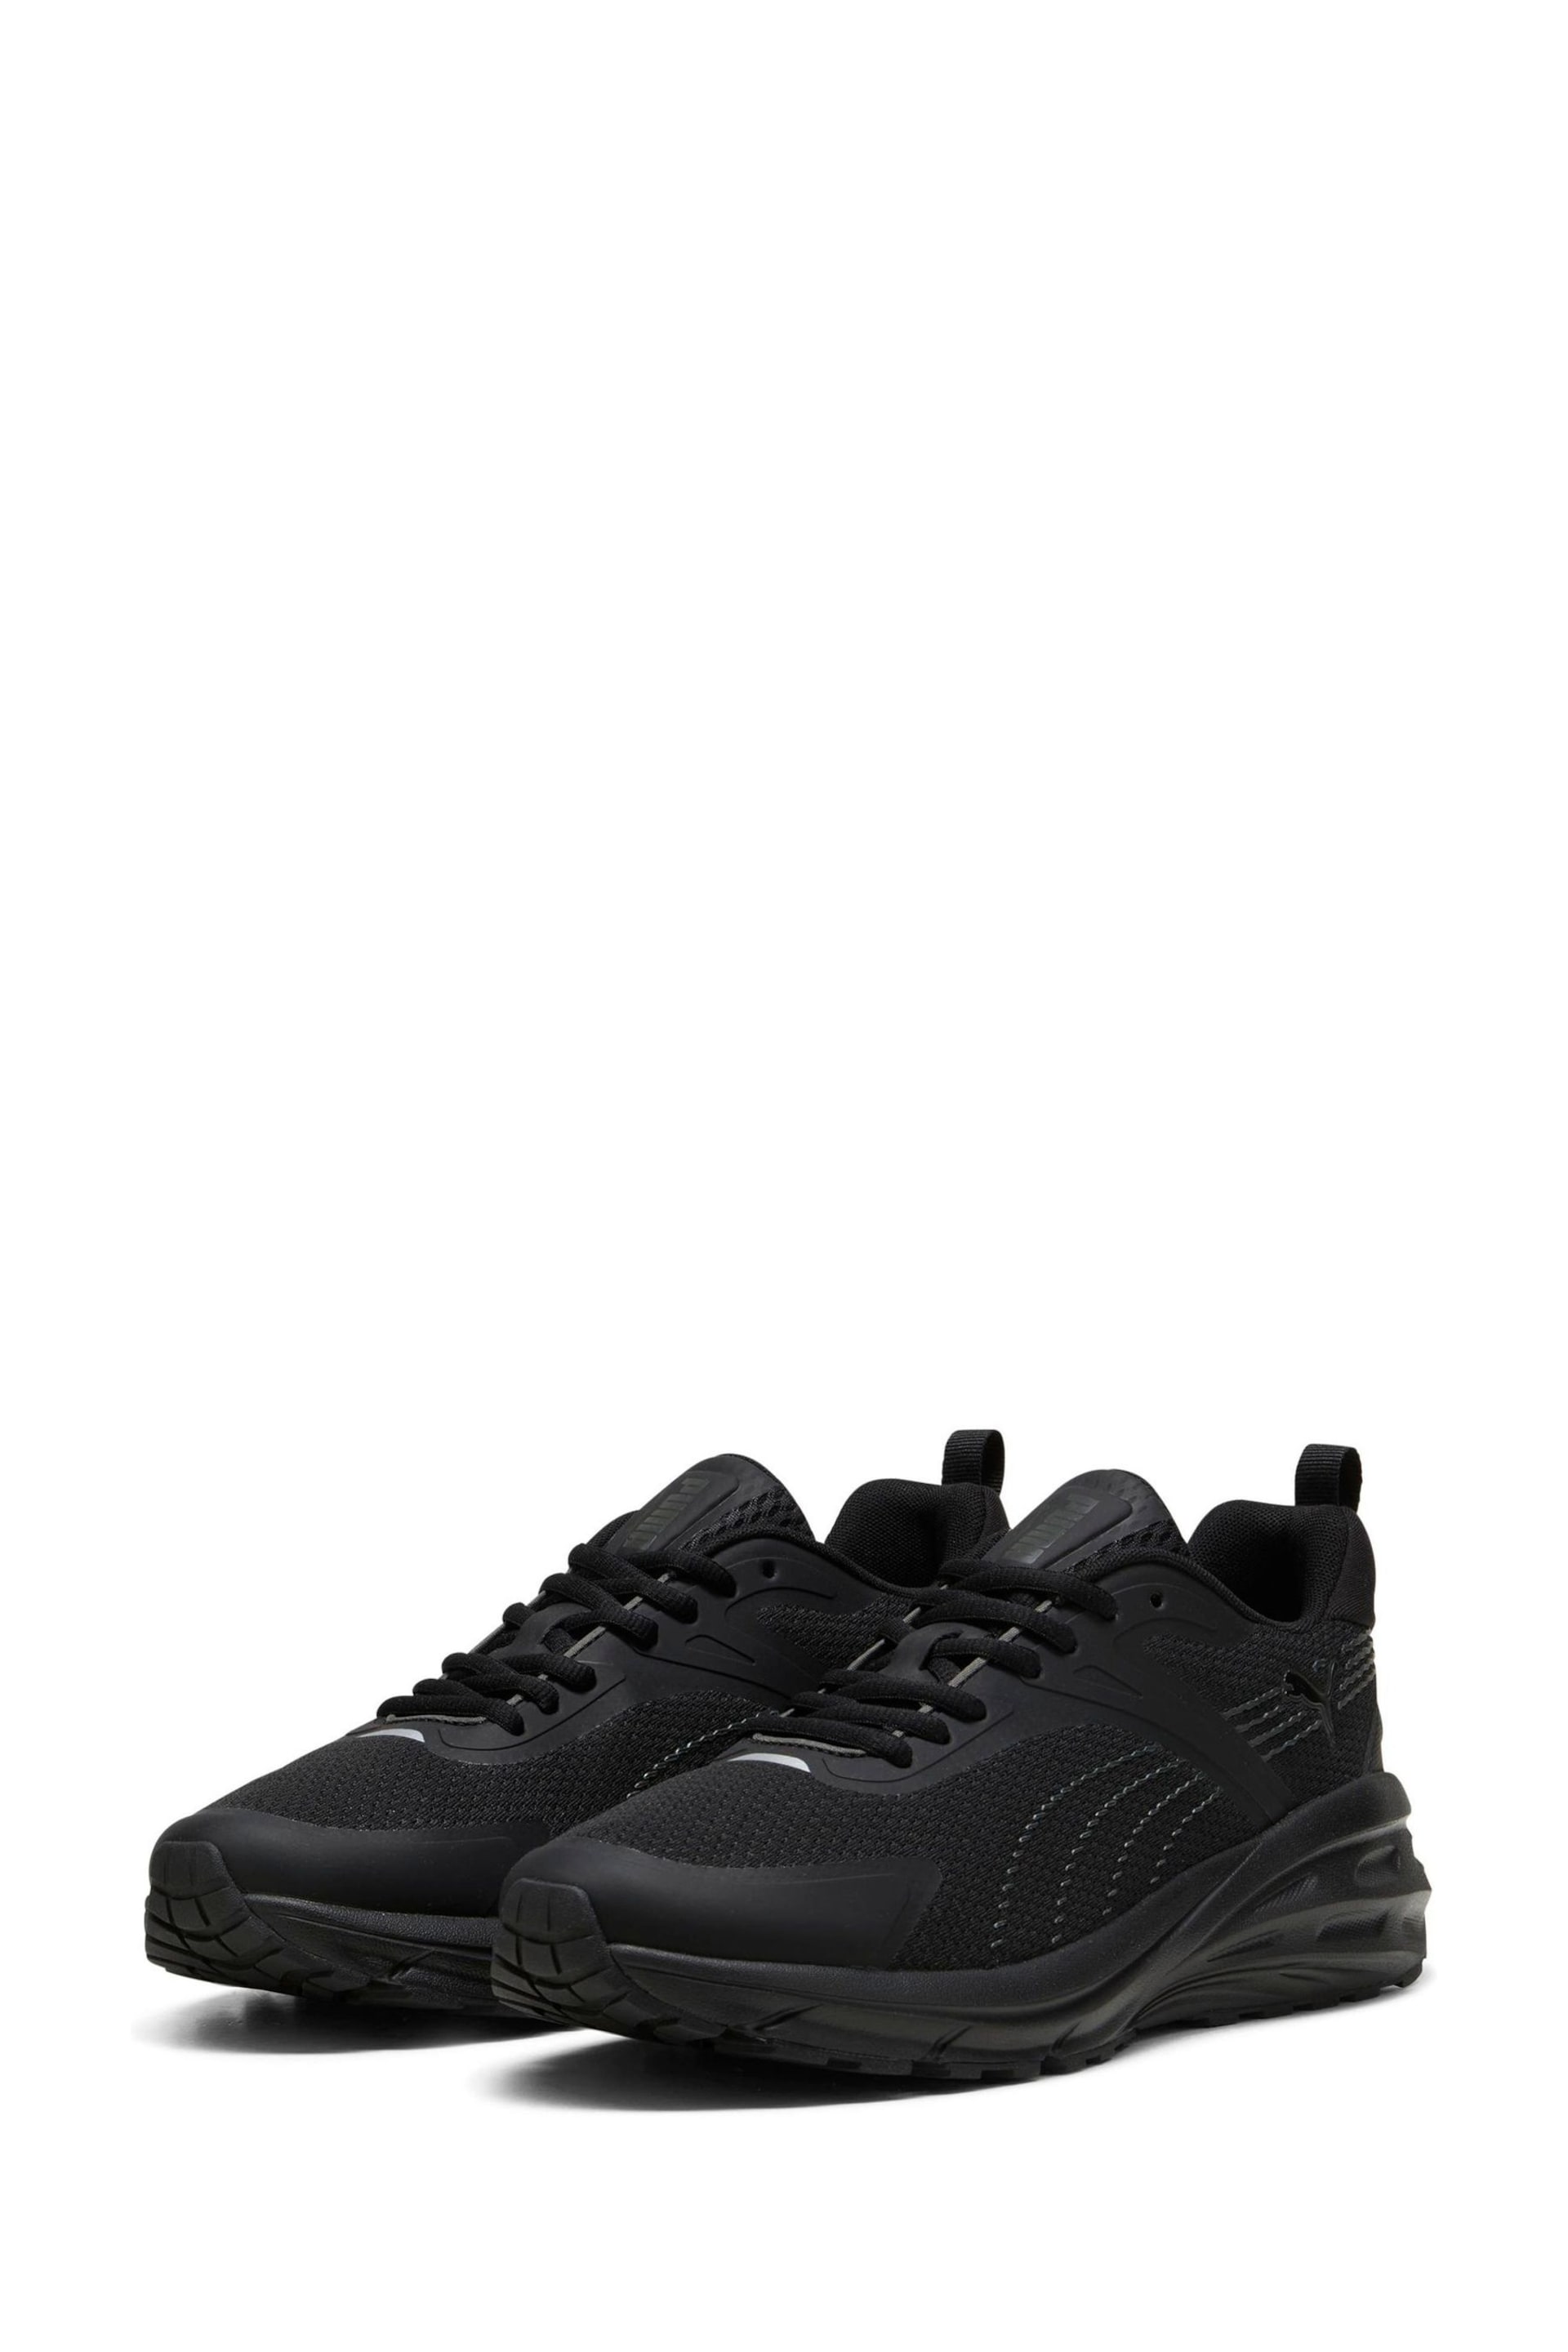 Puma Black Mens Hypnotic Sneakers - Image 3 of 8